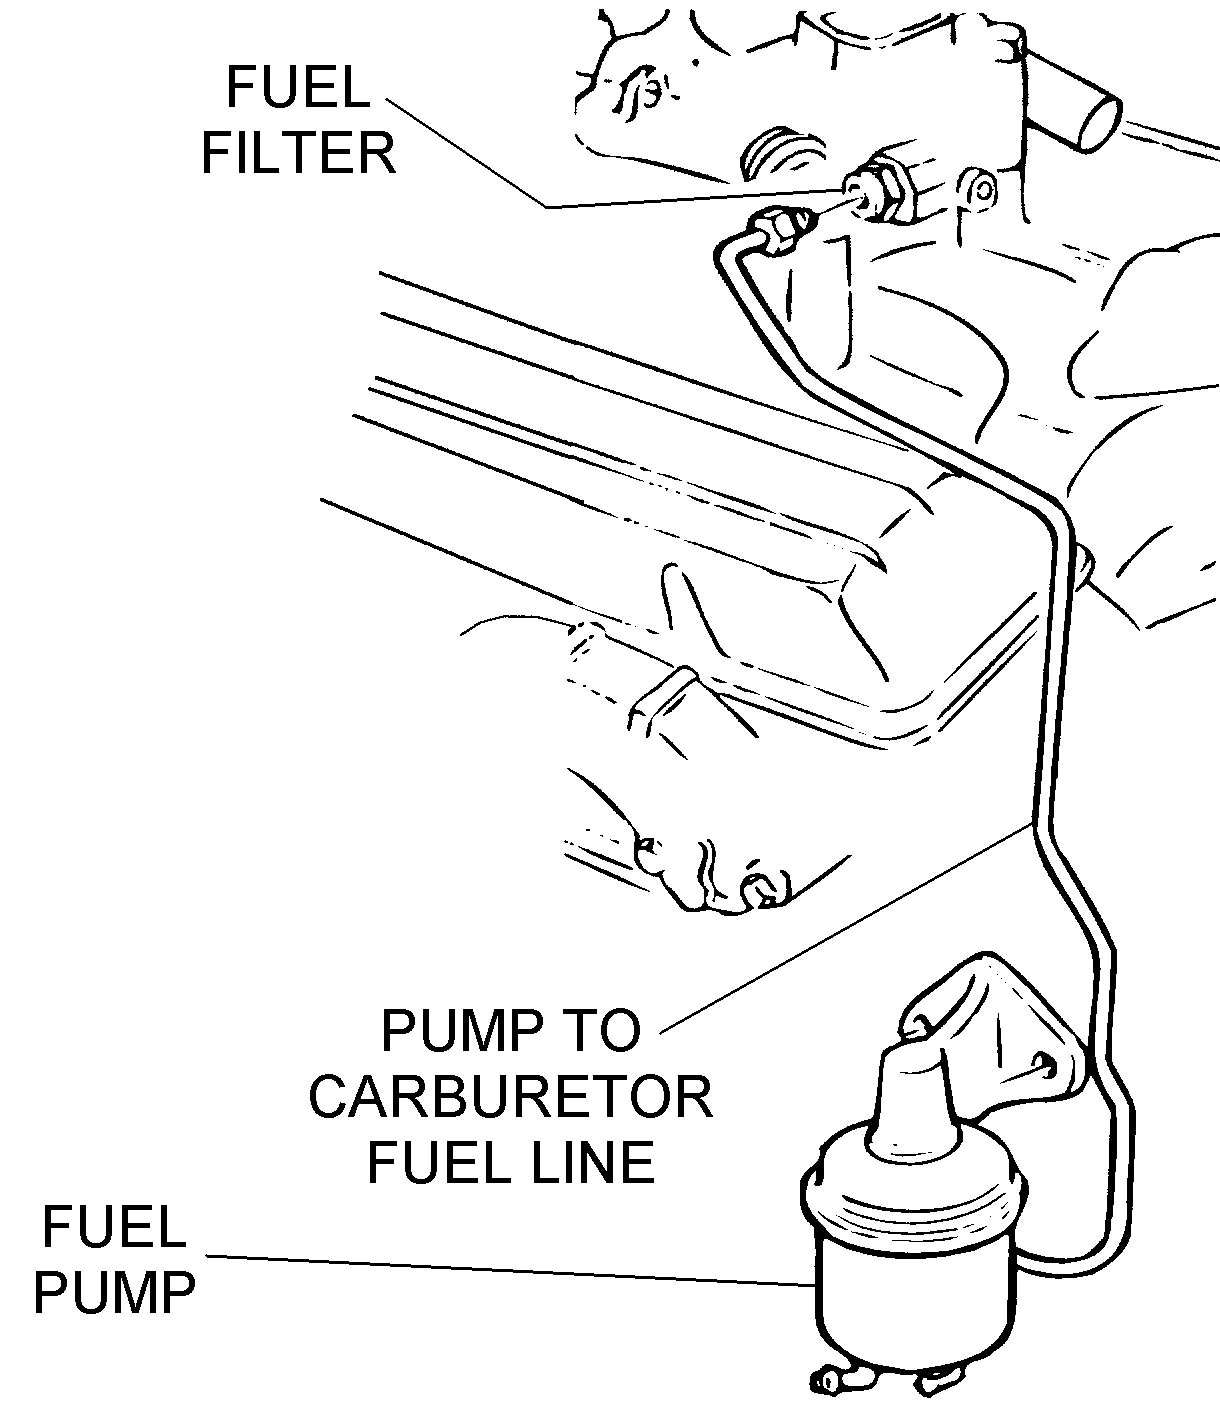 Pump To Carburetor Fuel Line - Diagram View